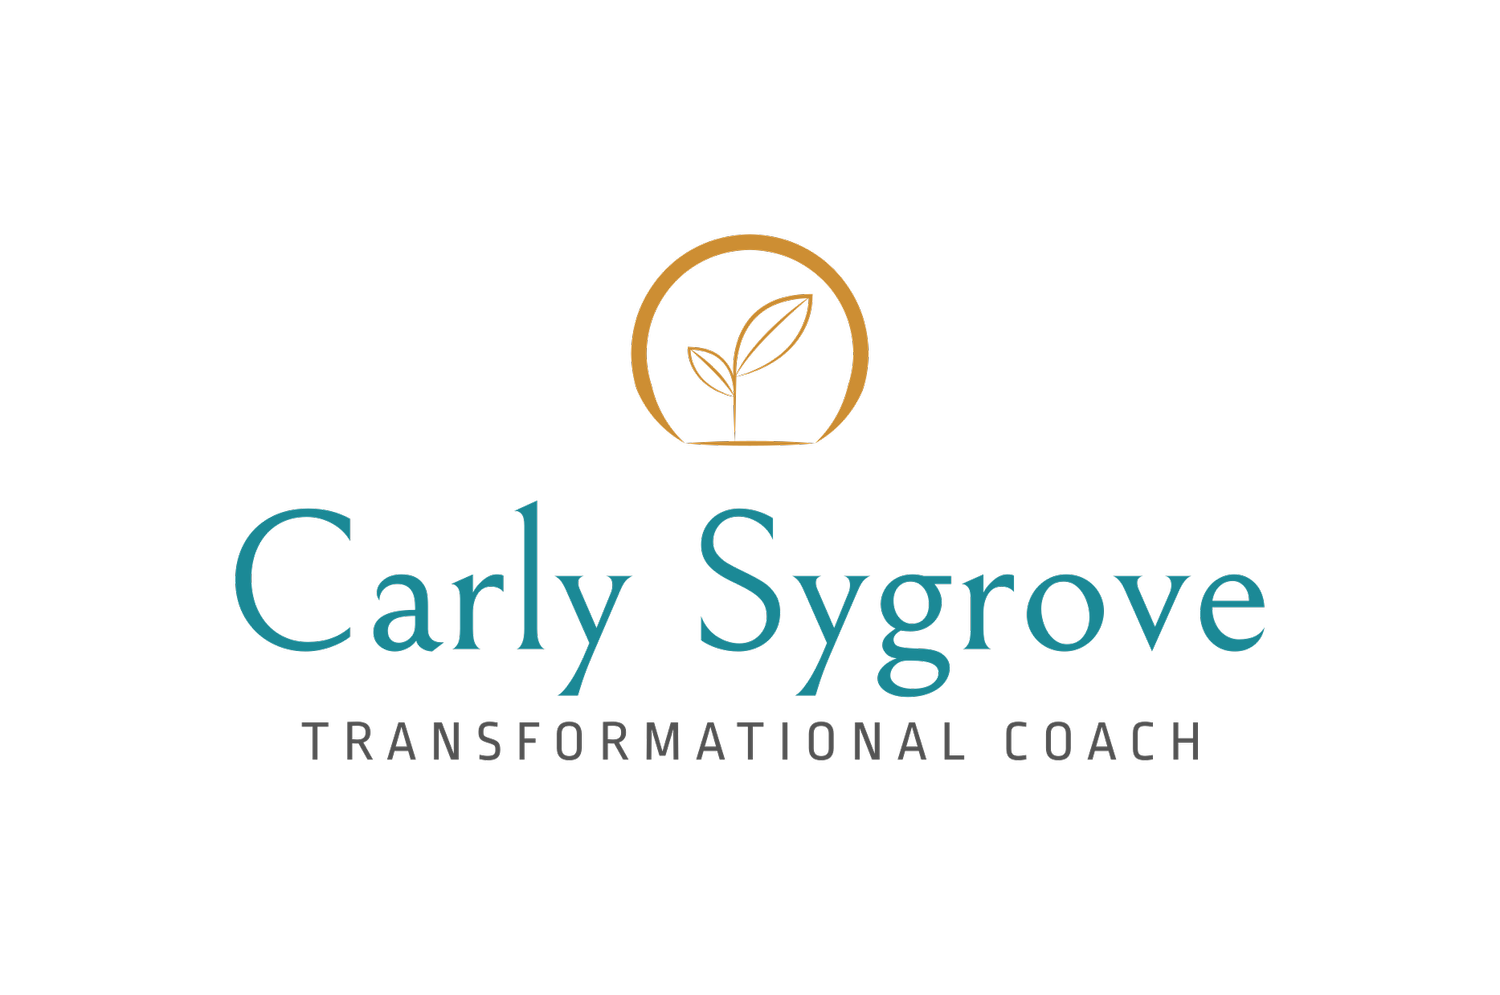 Carly Sygrove - Hearing Loss Coach